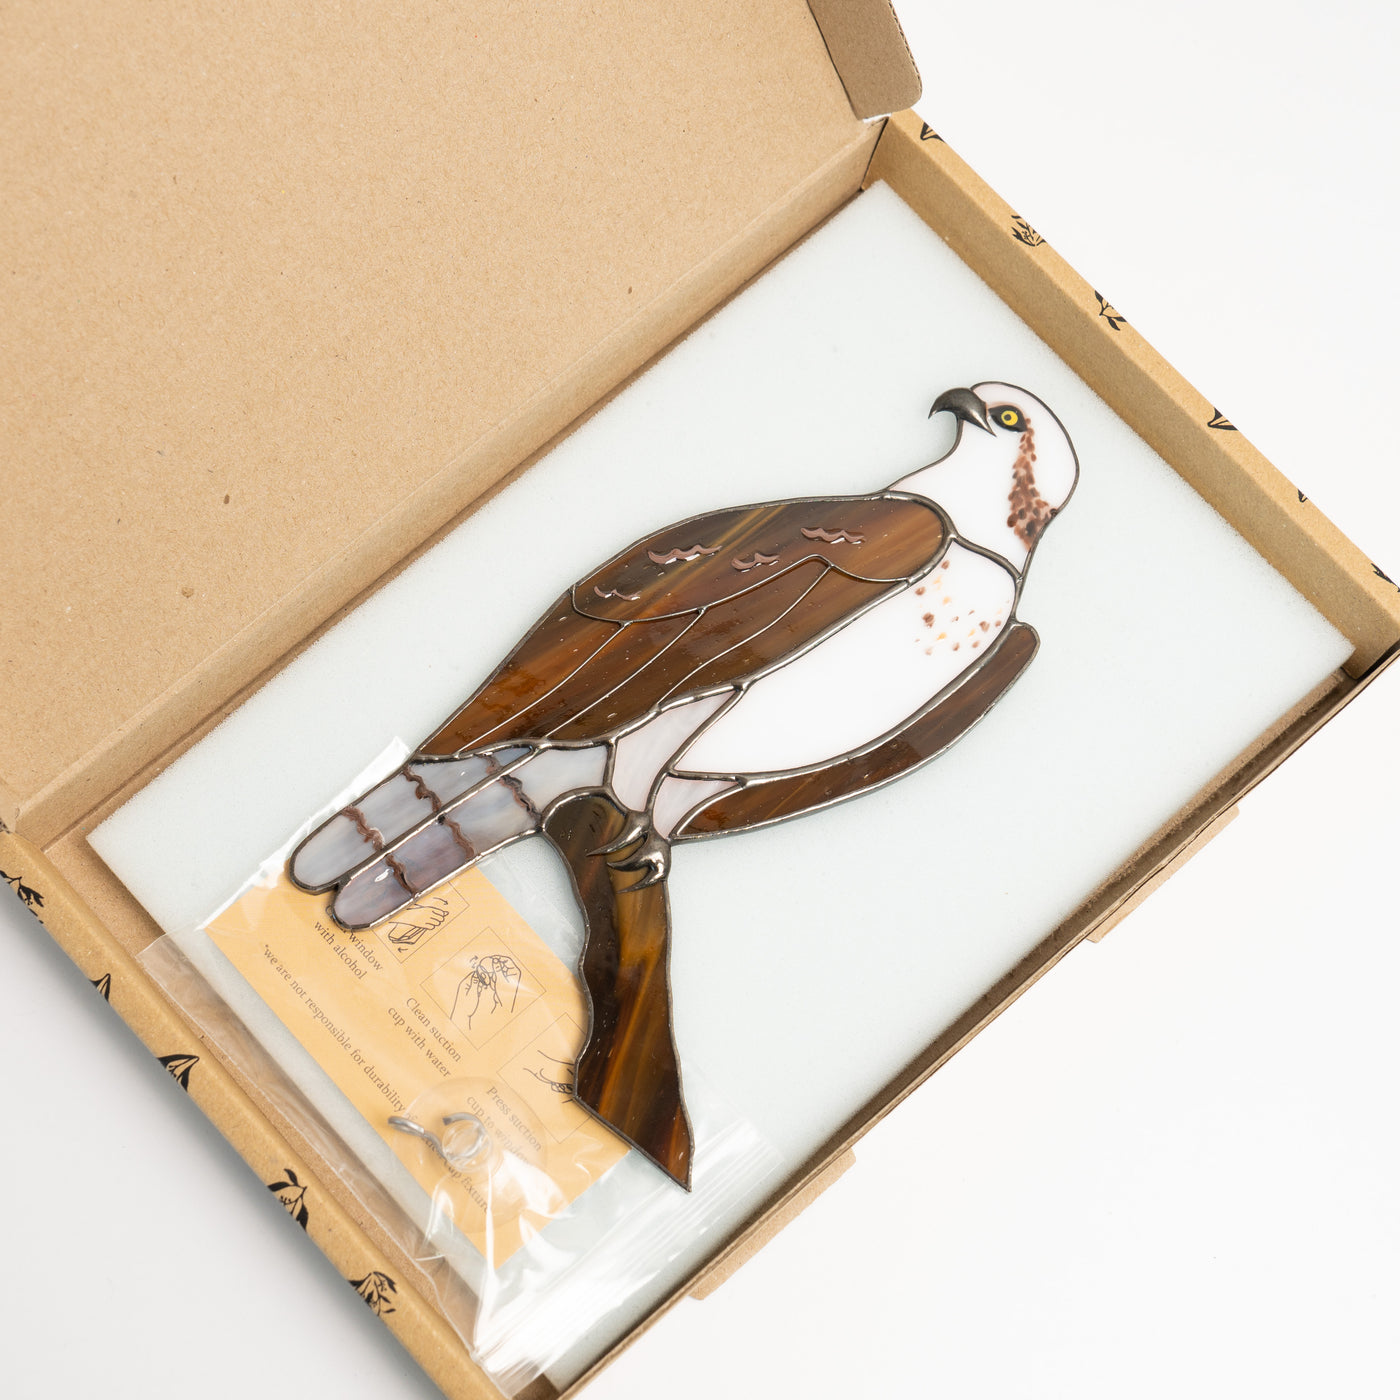 Osprey suncatcher in a brand box